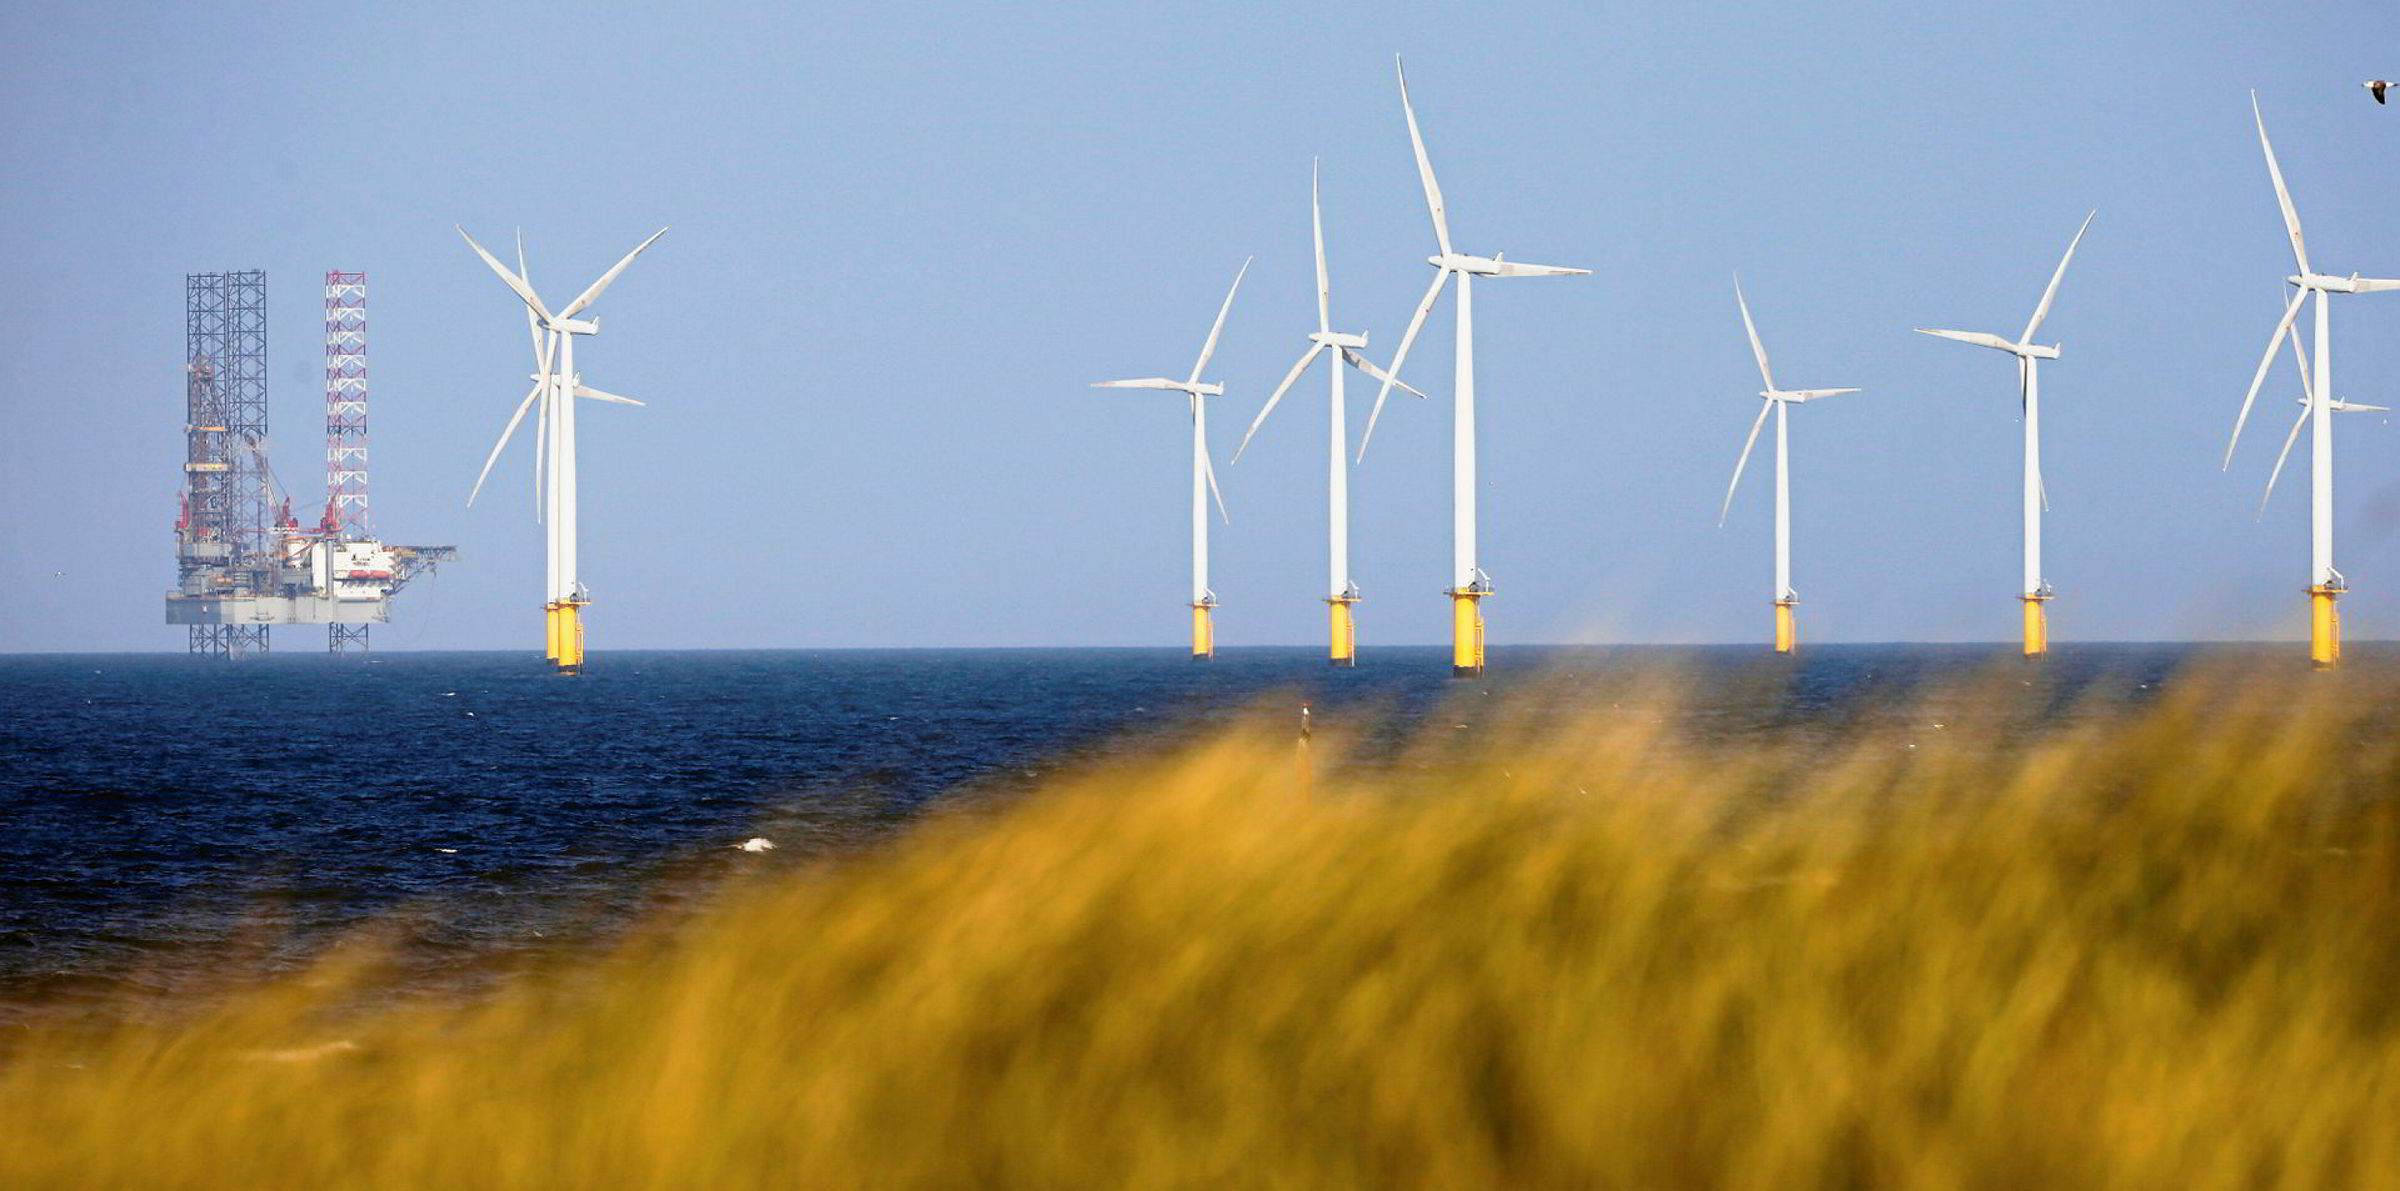 EVOL: Oily money, Seagreen success and ship-shape wind turbines